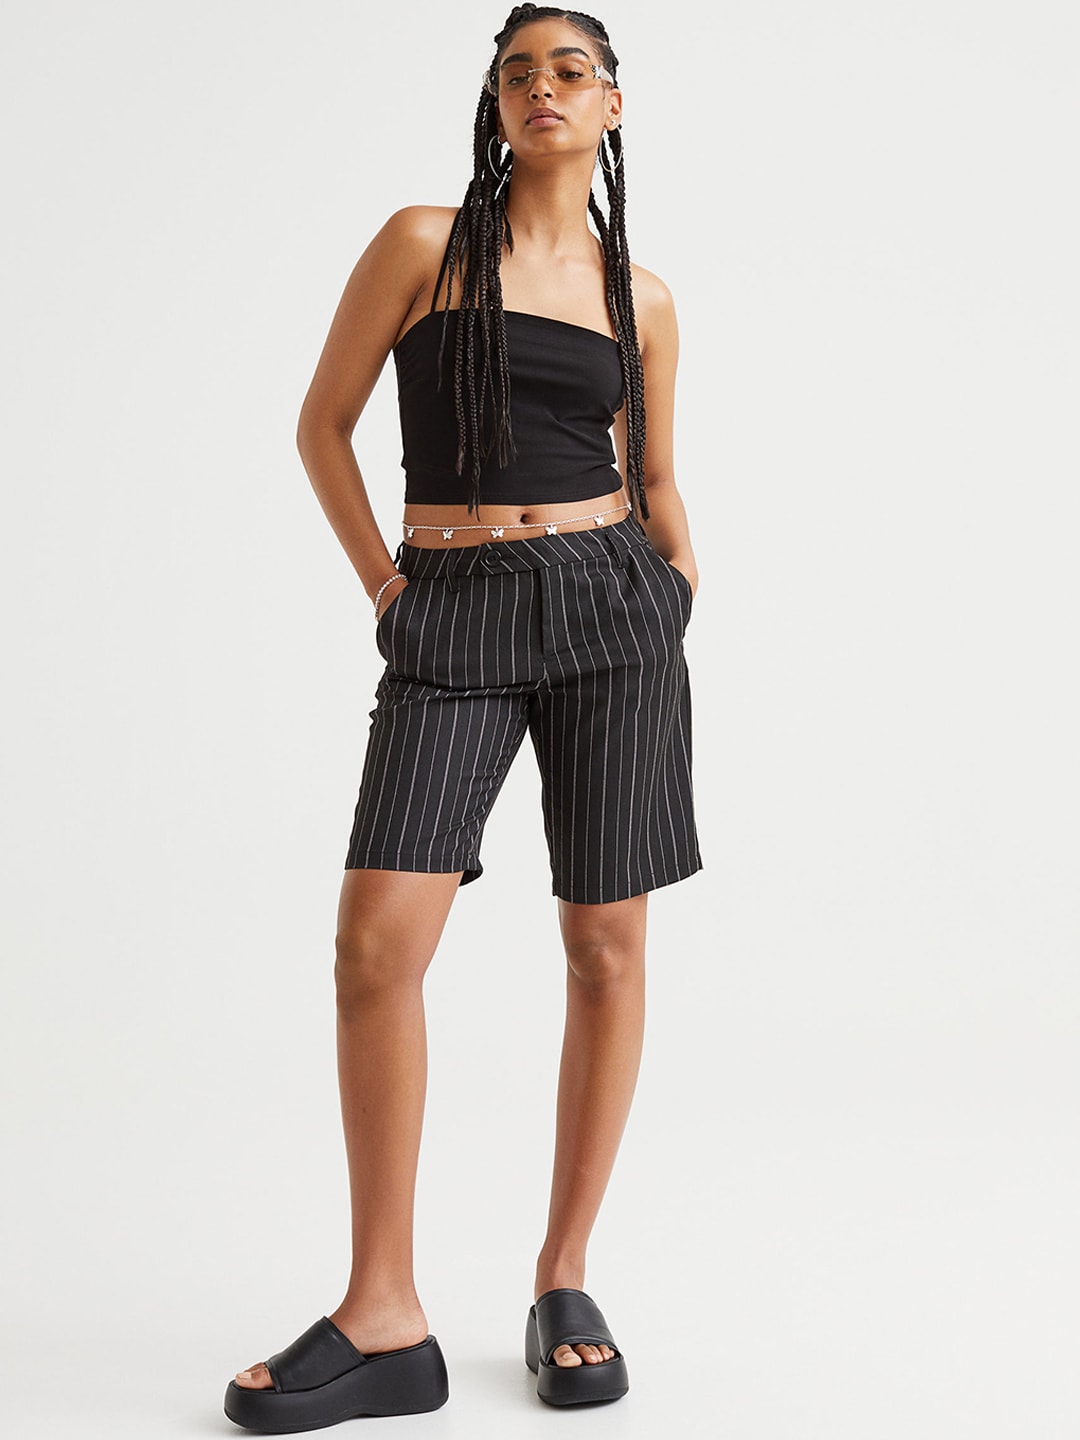 H&M Women Black Low-Waisted Bermuda Shorts Price in India